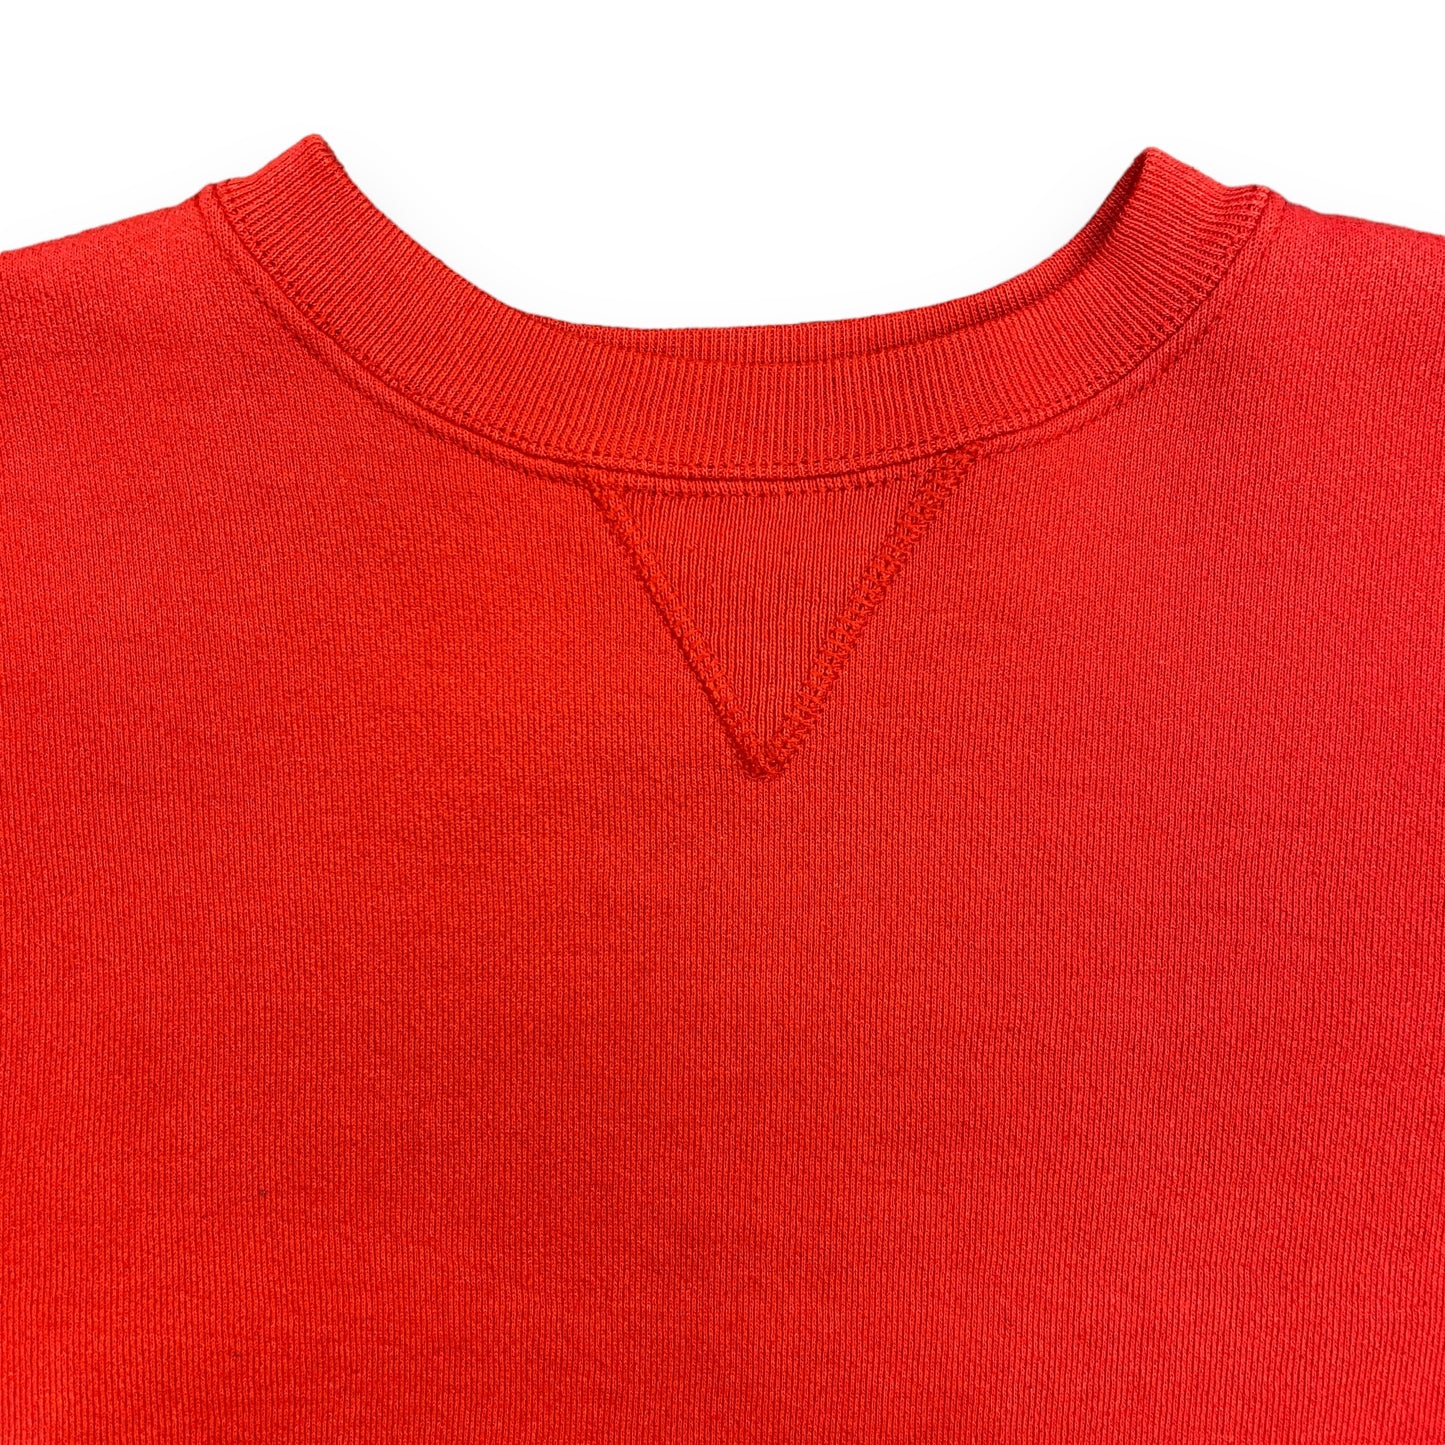 1980s Champion Single-V Red Crewneck Sweatshirt - Size XL